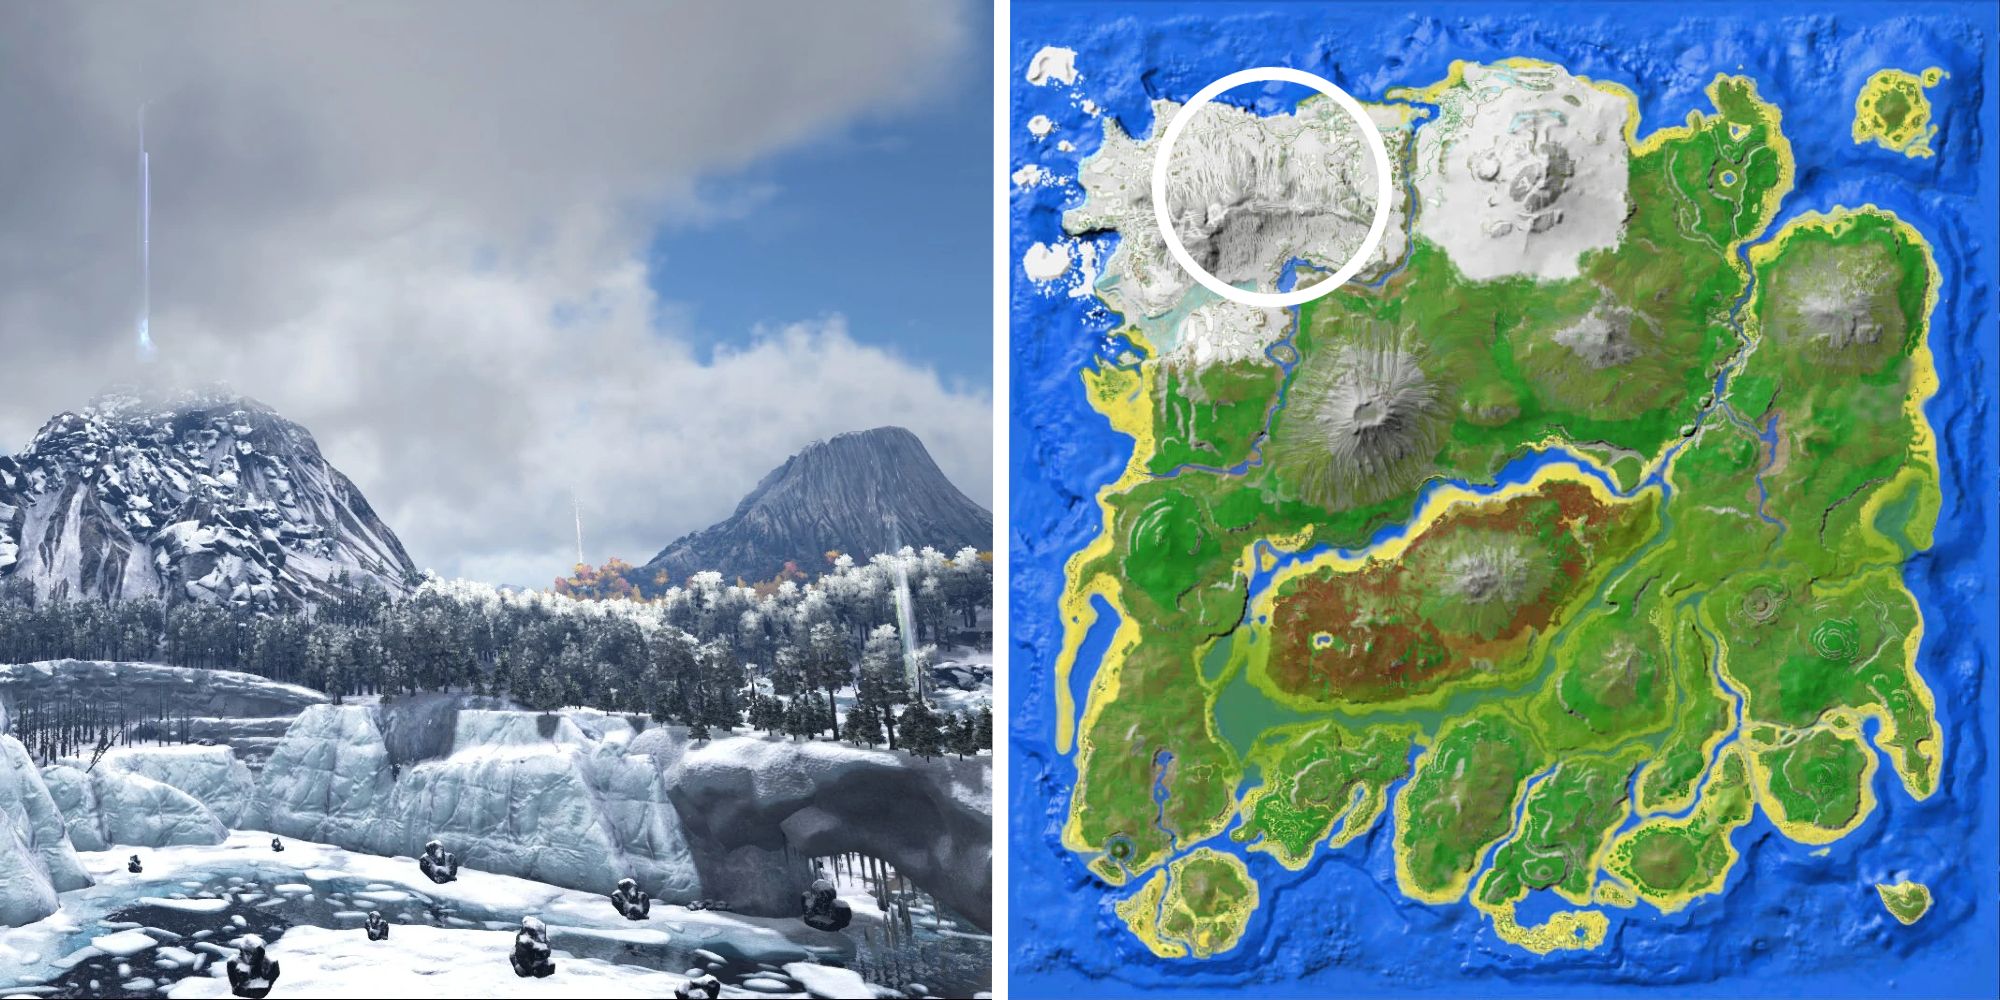 image of whitesky peak next to image of location on map